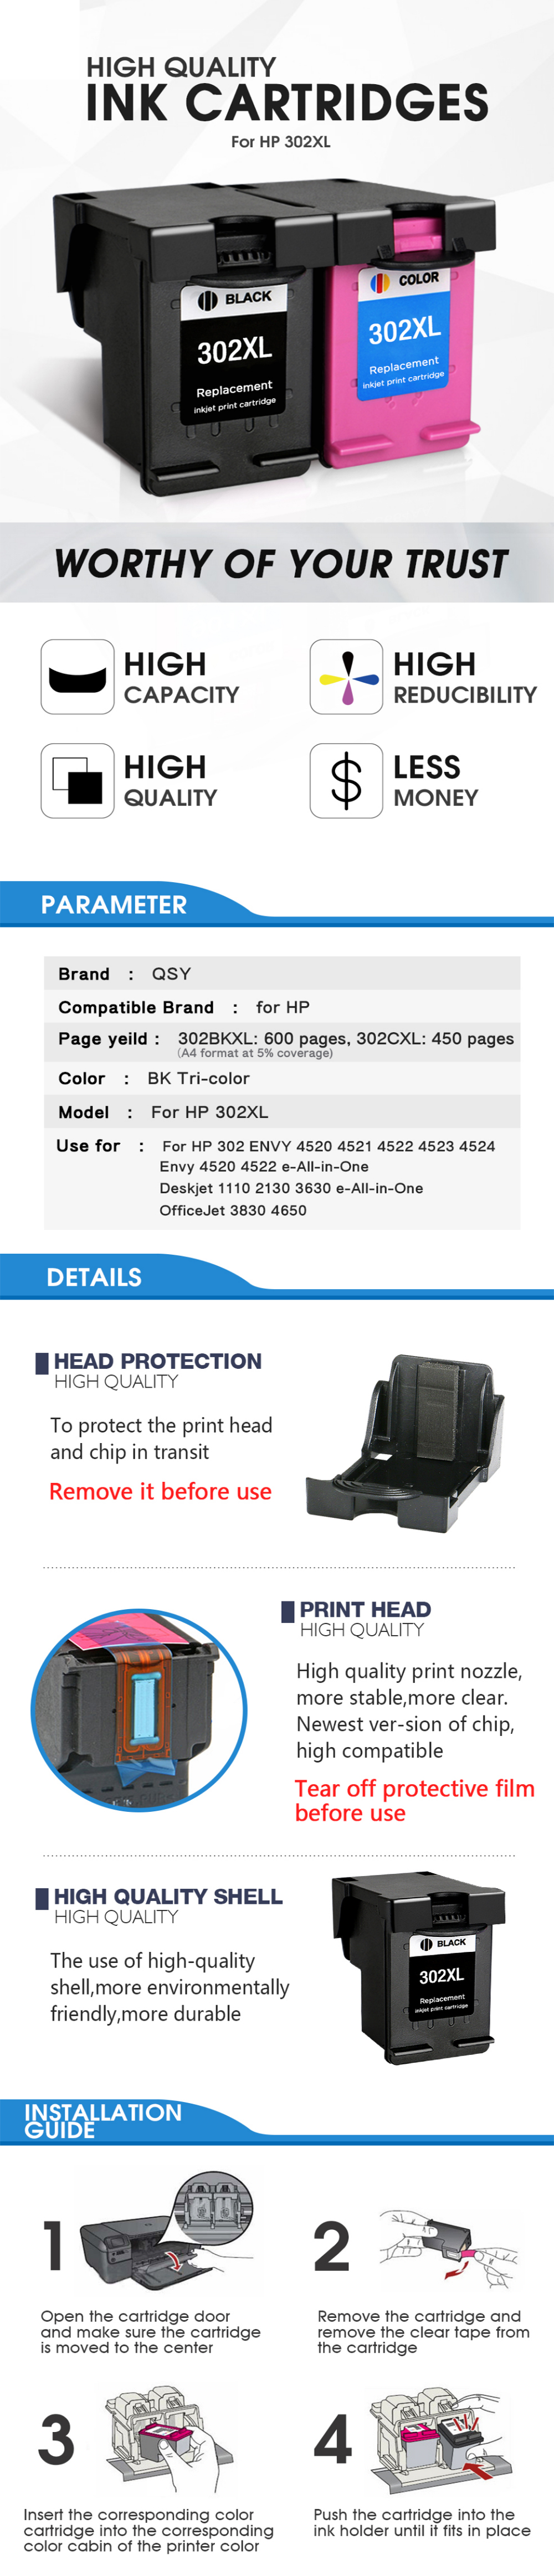 Compatible-With-HP-302XL-Ink-Cartridge-Plug-HPENVY4520-Officejet-4650-Inkjet-Printer-2131-2132-1418833